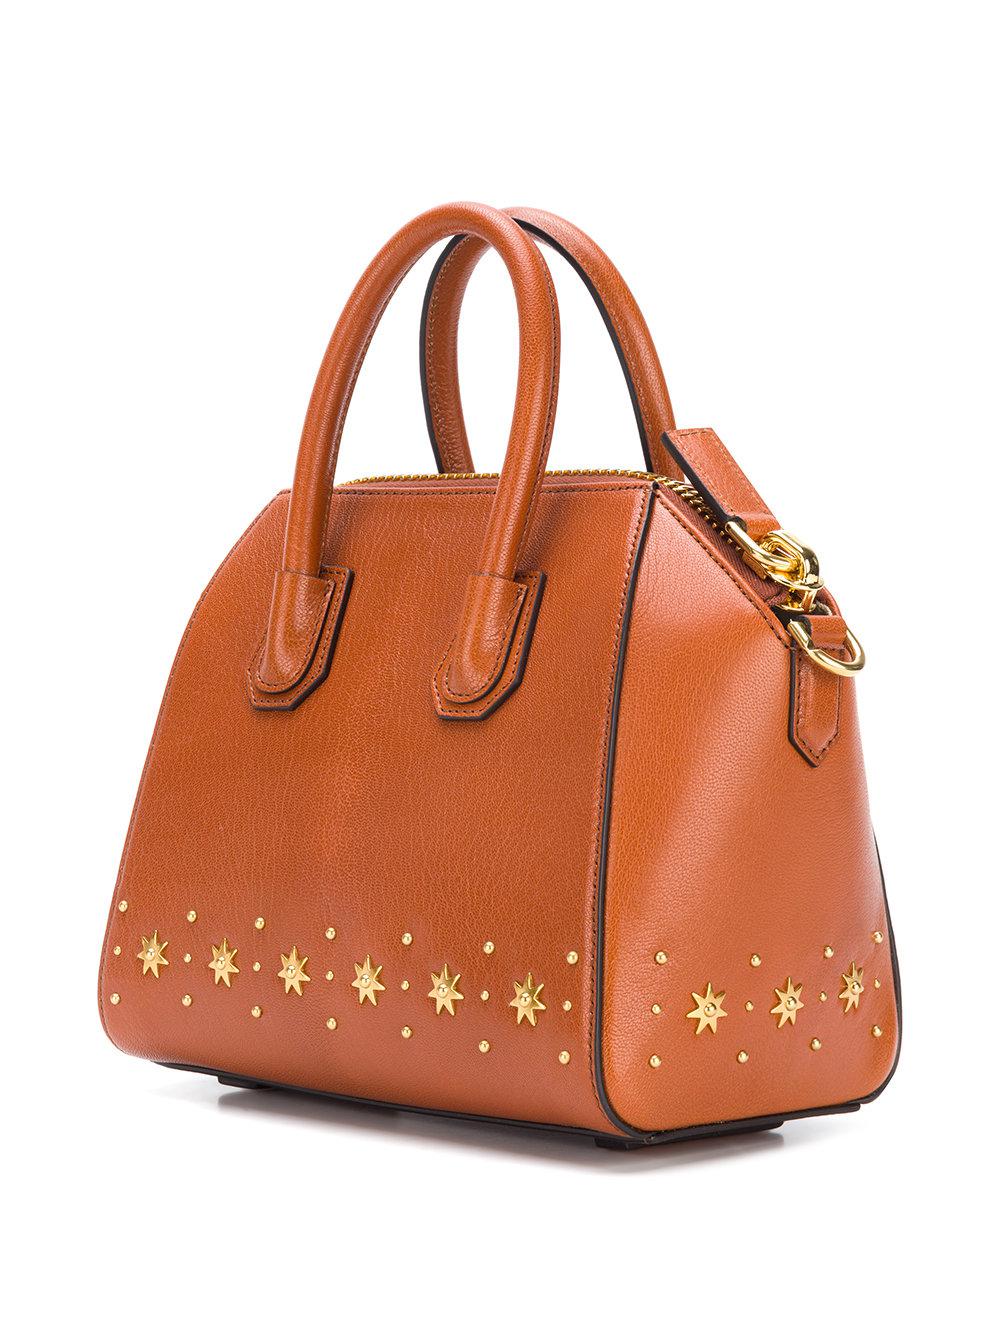 Givenchy Mini Antigona Bag in Brown - Lyst